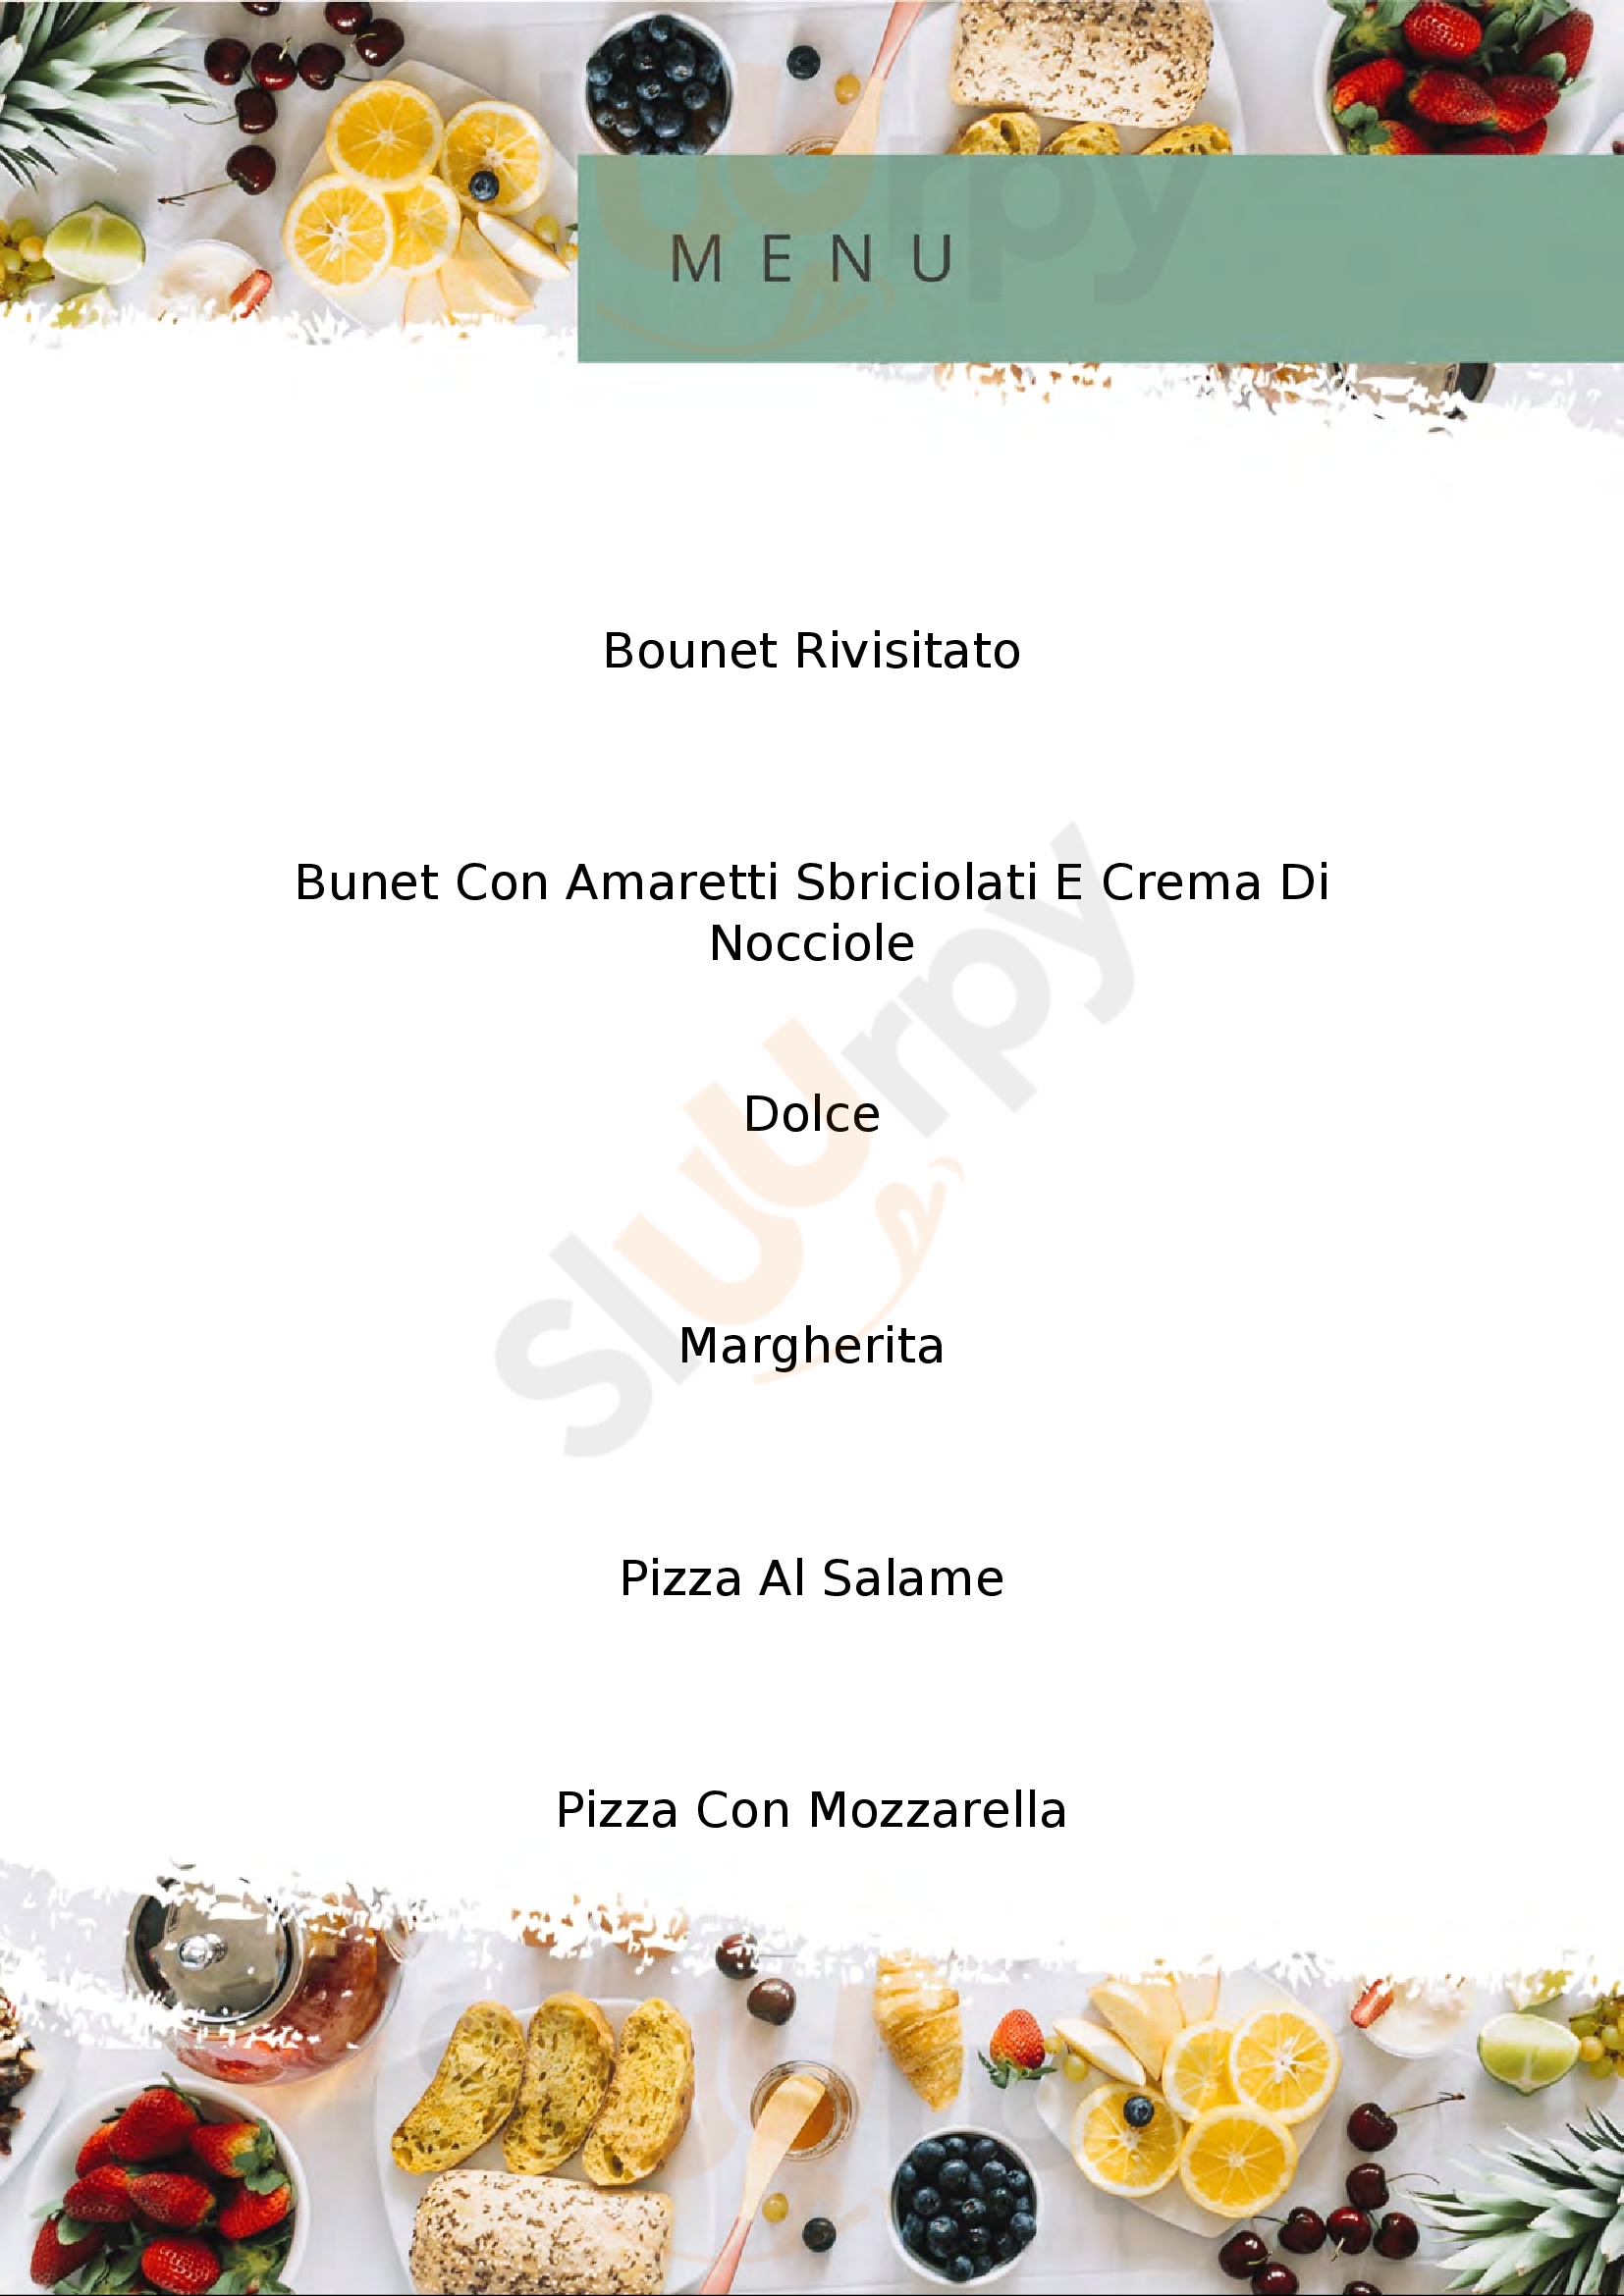 Sp143 Pizzeria Contemporanea Orbassano menù 1 pagina